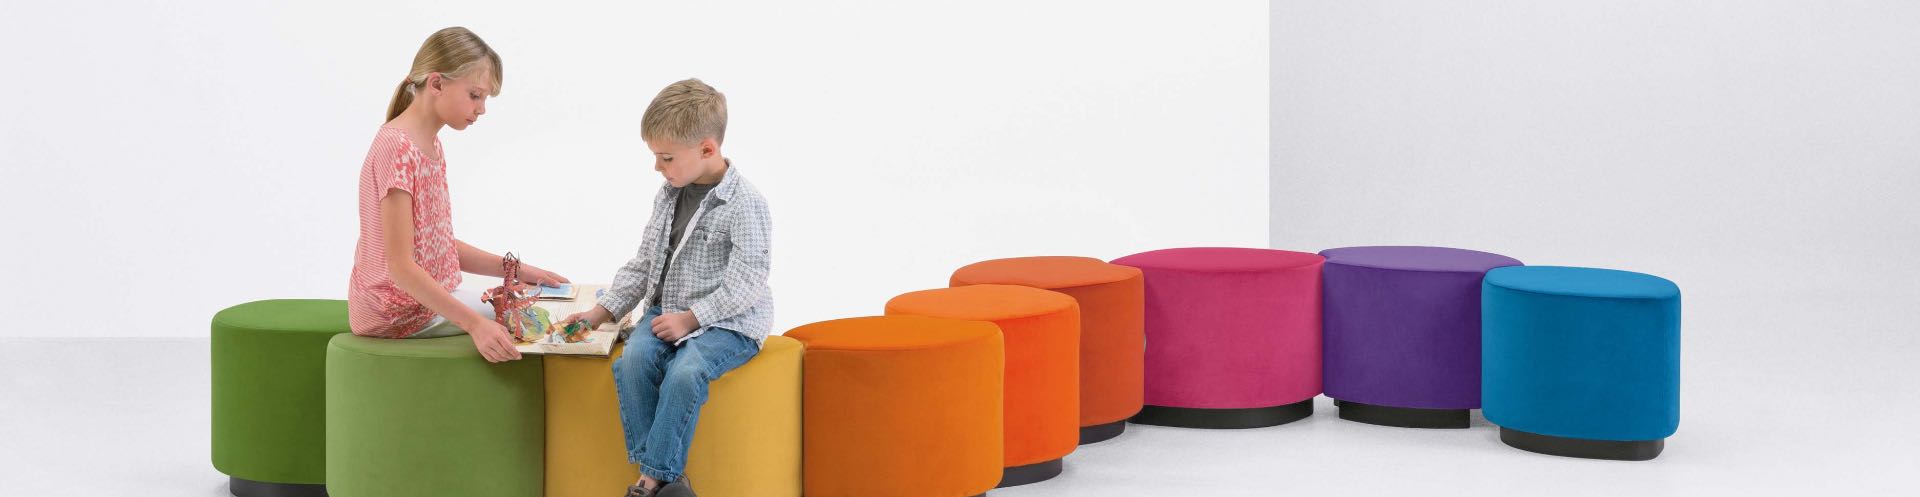 https://arcadiacontract.com/app/uploads/2019/08/childrens-furniture.jpg